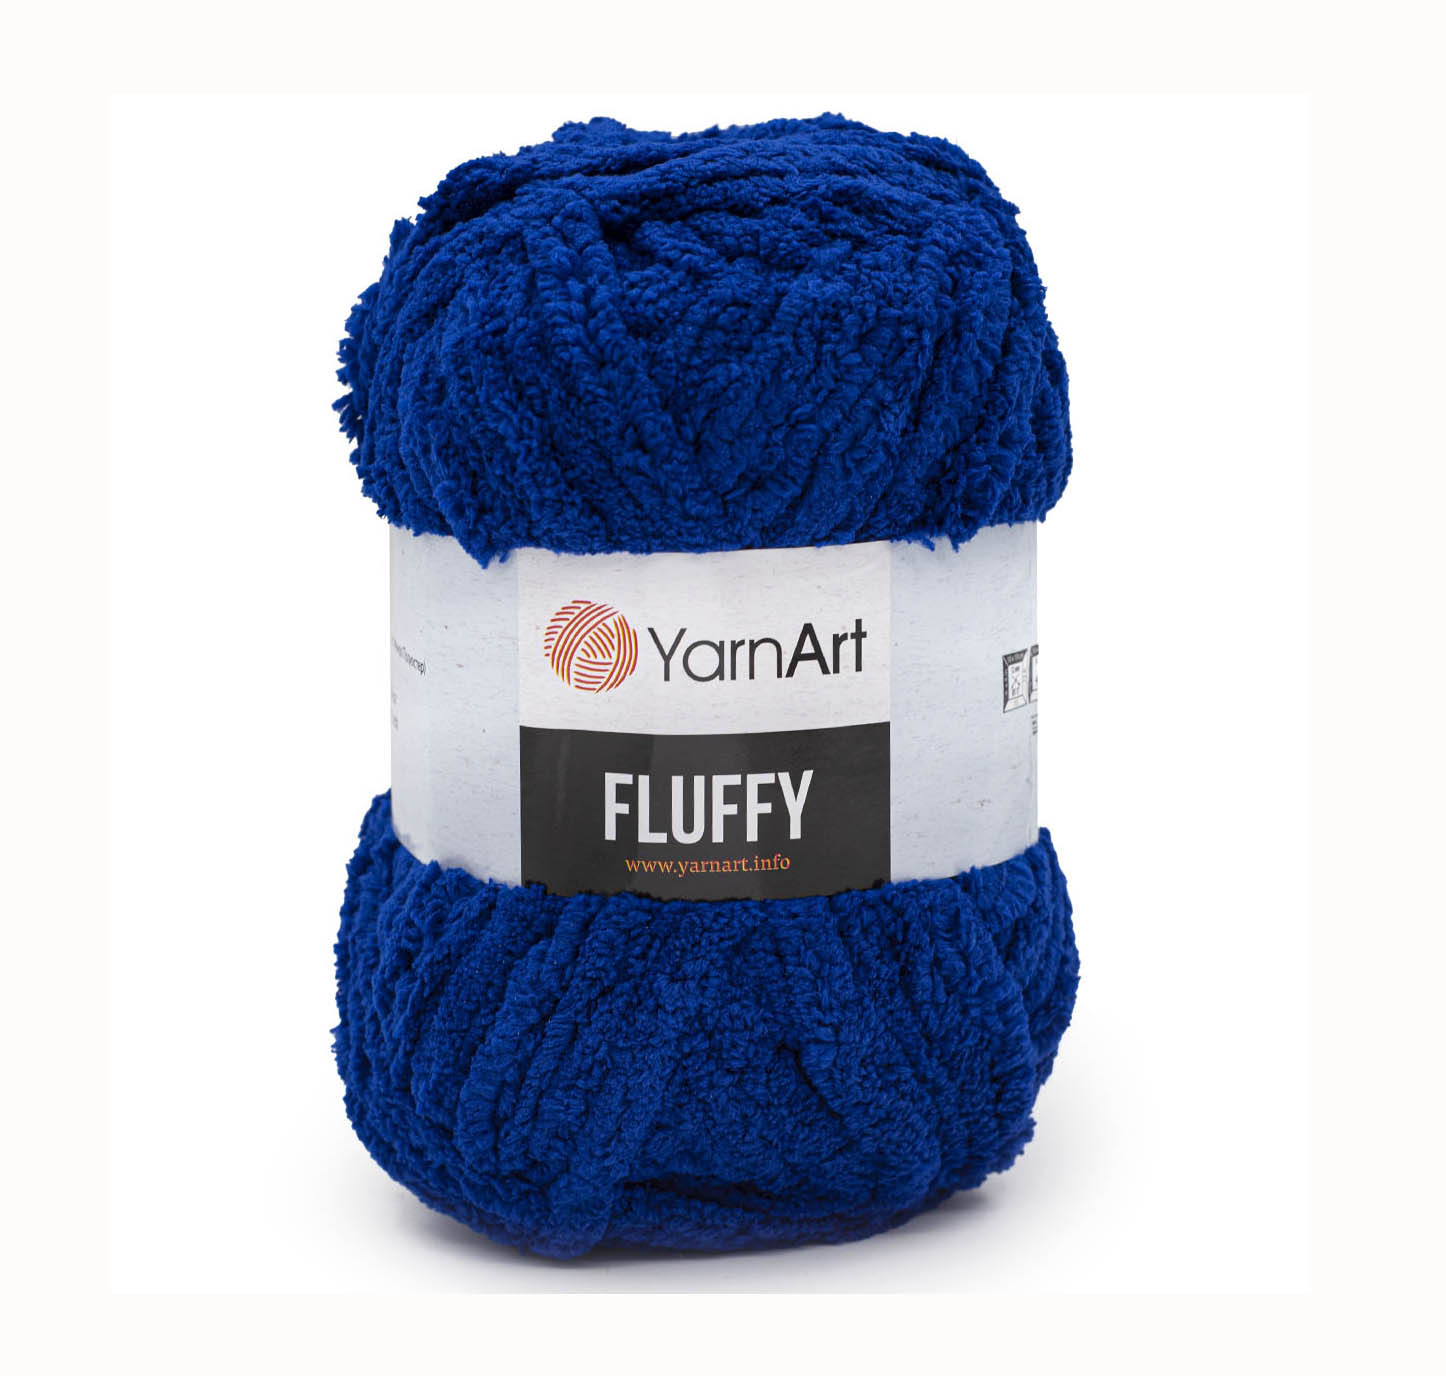 YarnArt Fluffy 727 